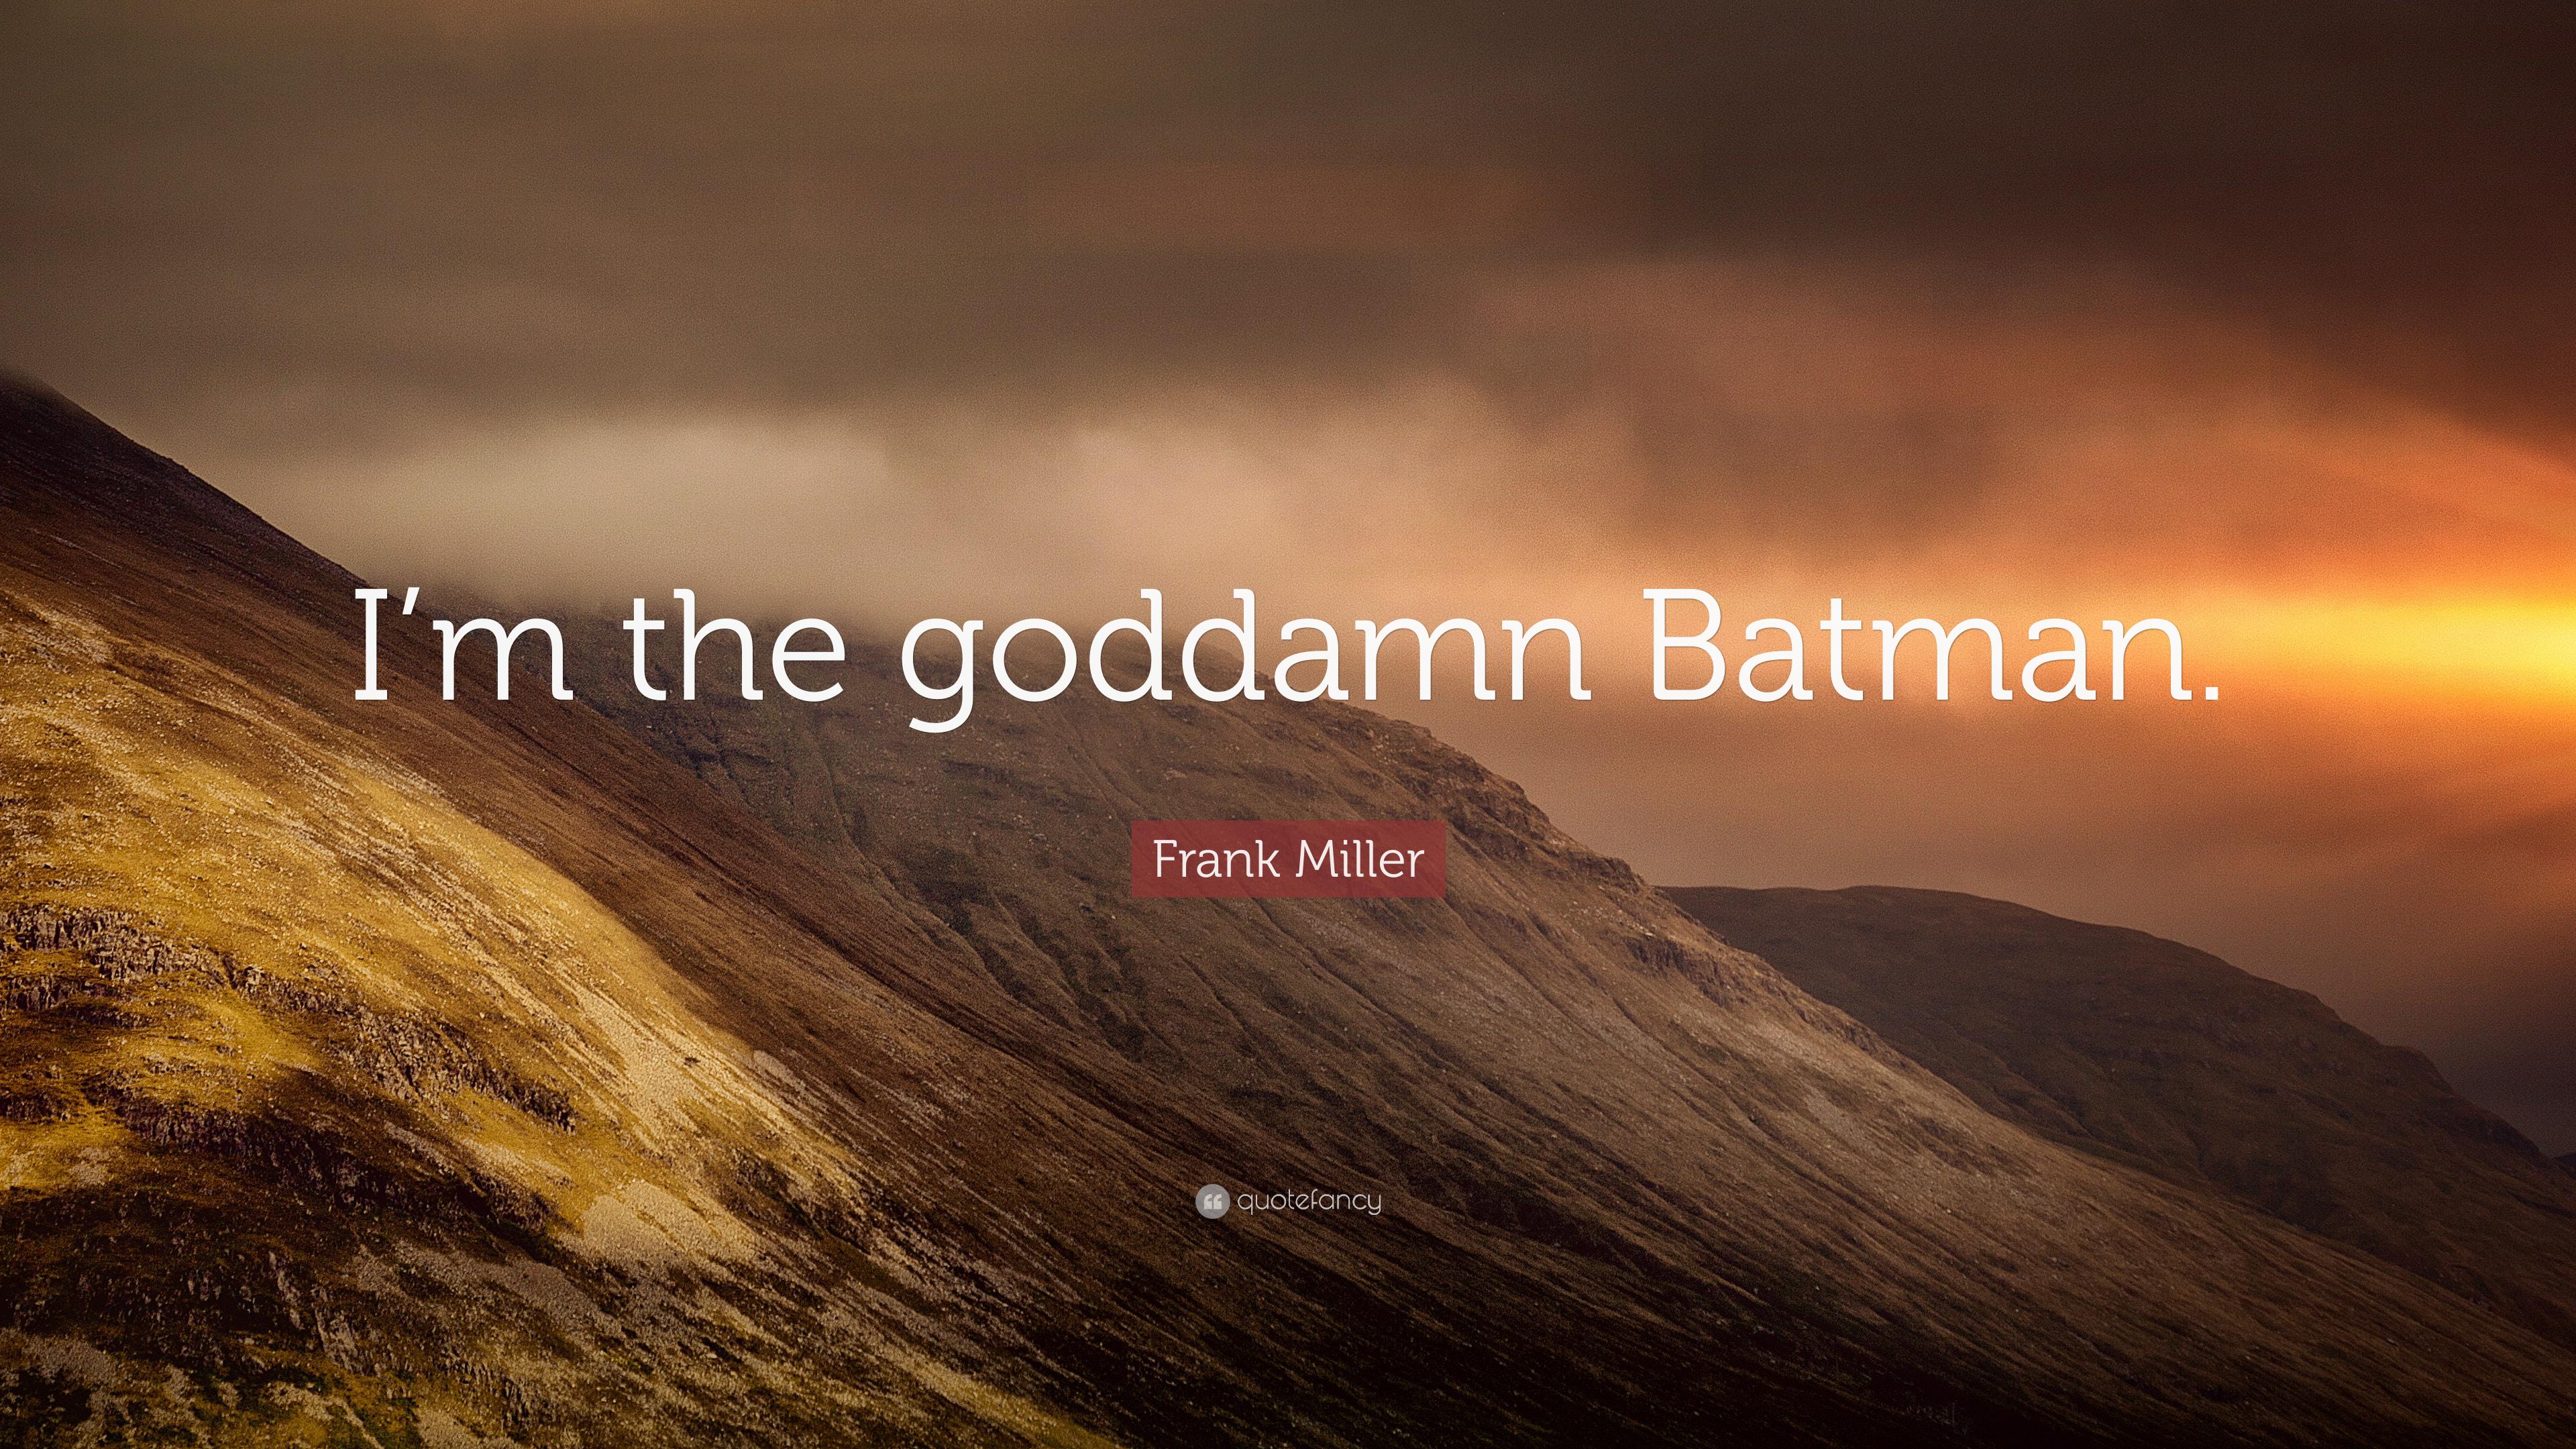 Frank Miller Quote: “I'm the goddamn Batman.” 7 wallpaper